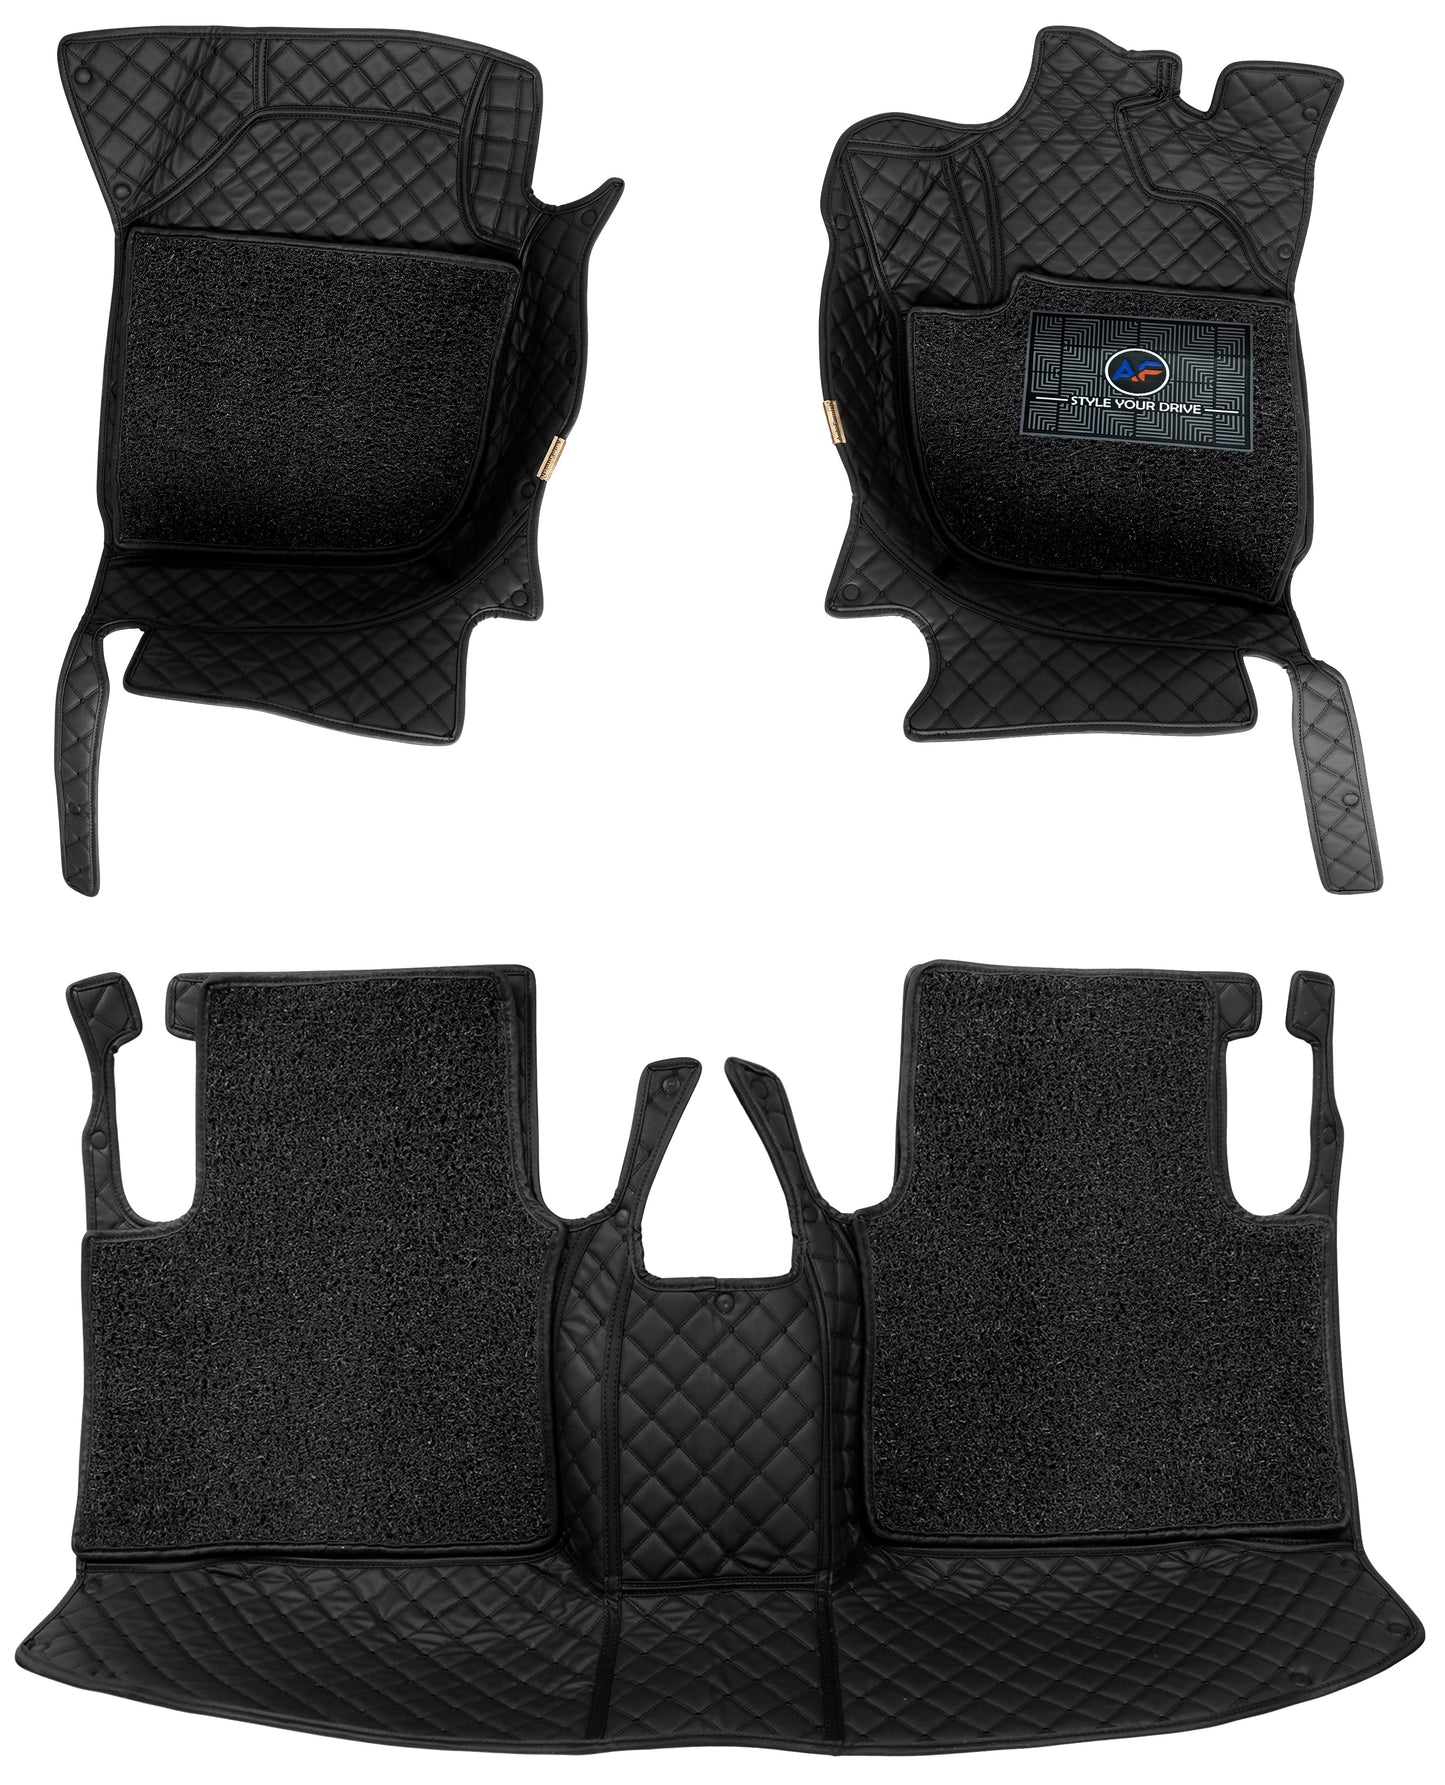 Tata Safari (7 Seater) (2021-22) 7D Luxury Car Mat, All Weather Proof, Anti-Skid, 100% Waterproof & Odorless with Unique Diamond Fish Design (24mm Luxury PU Leather, 2 Rows)